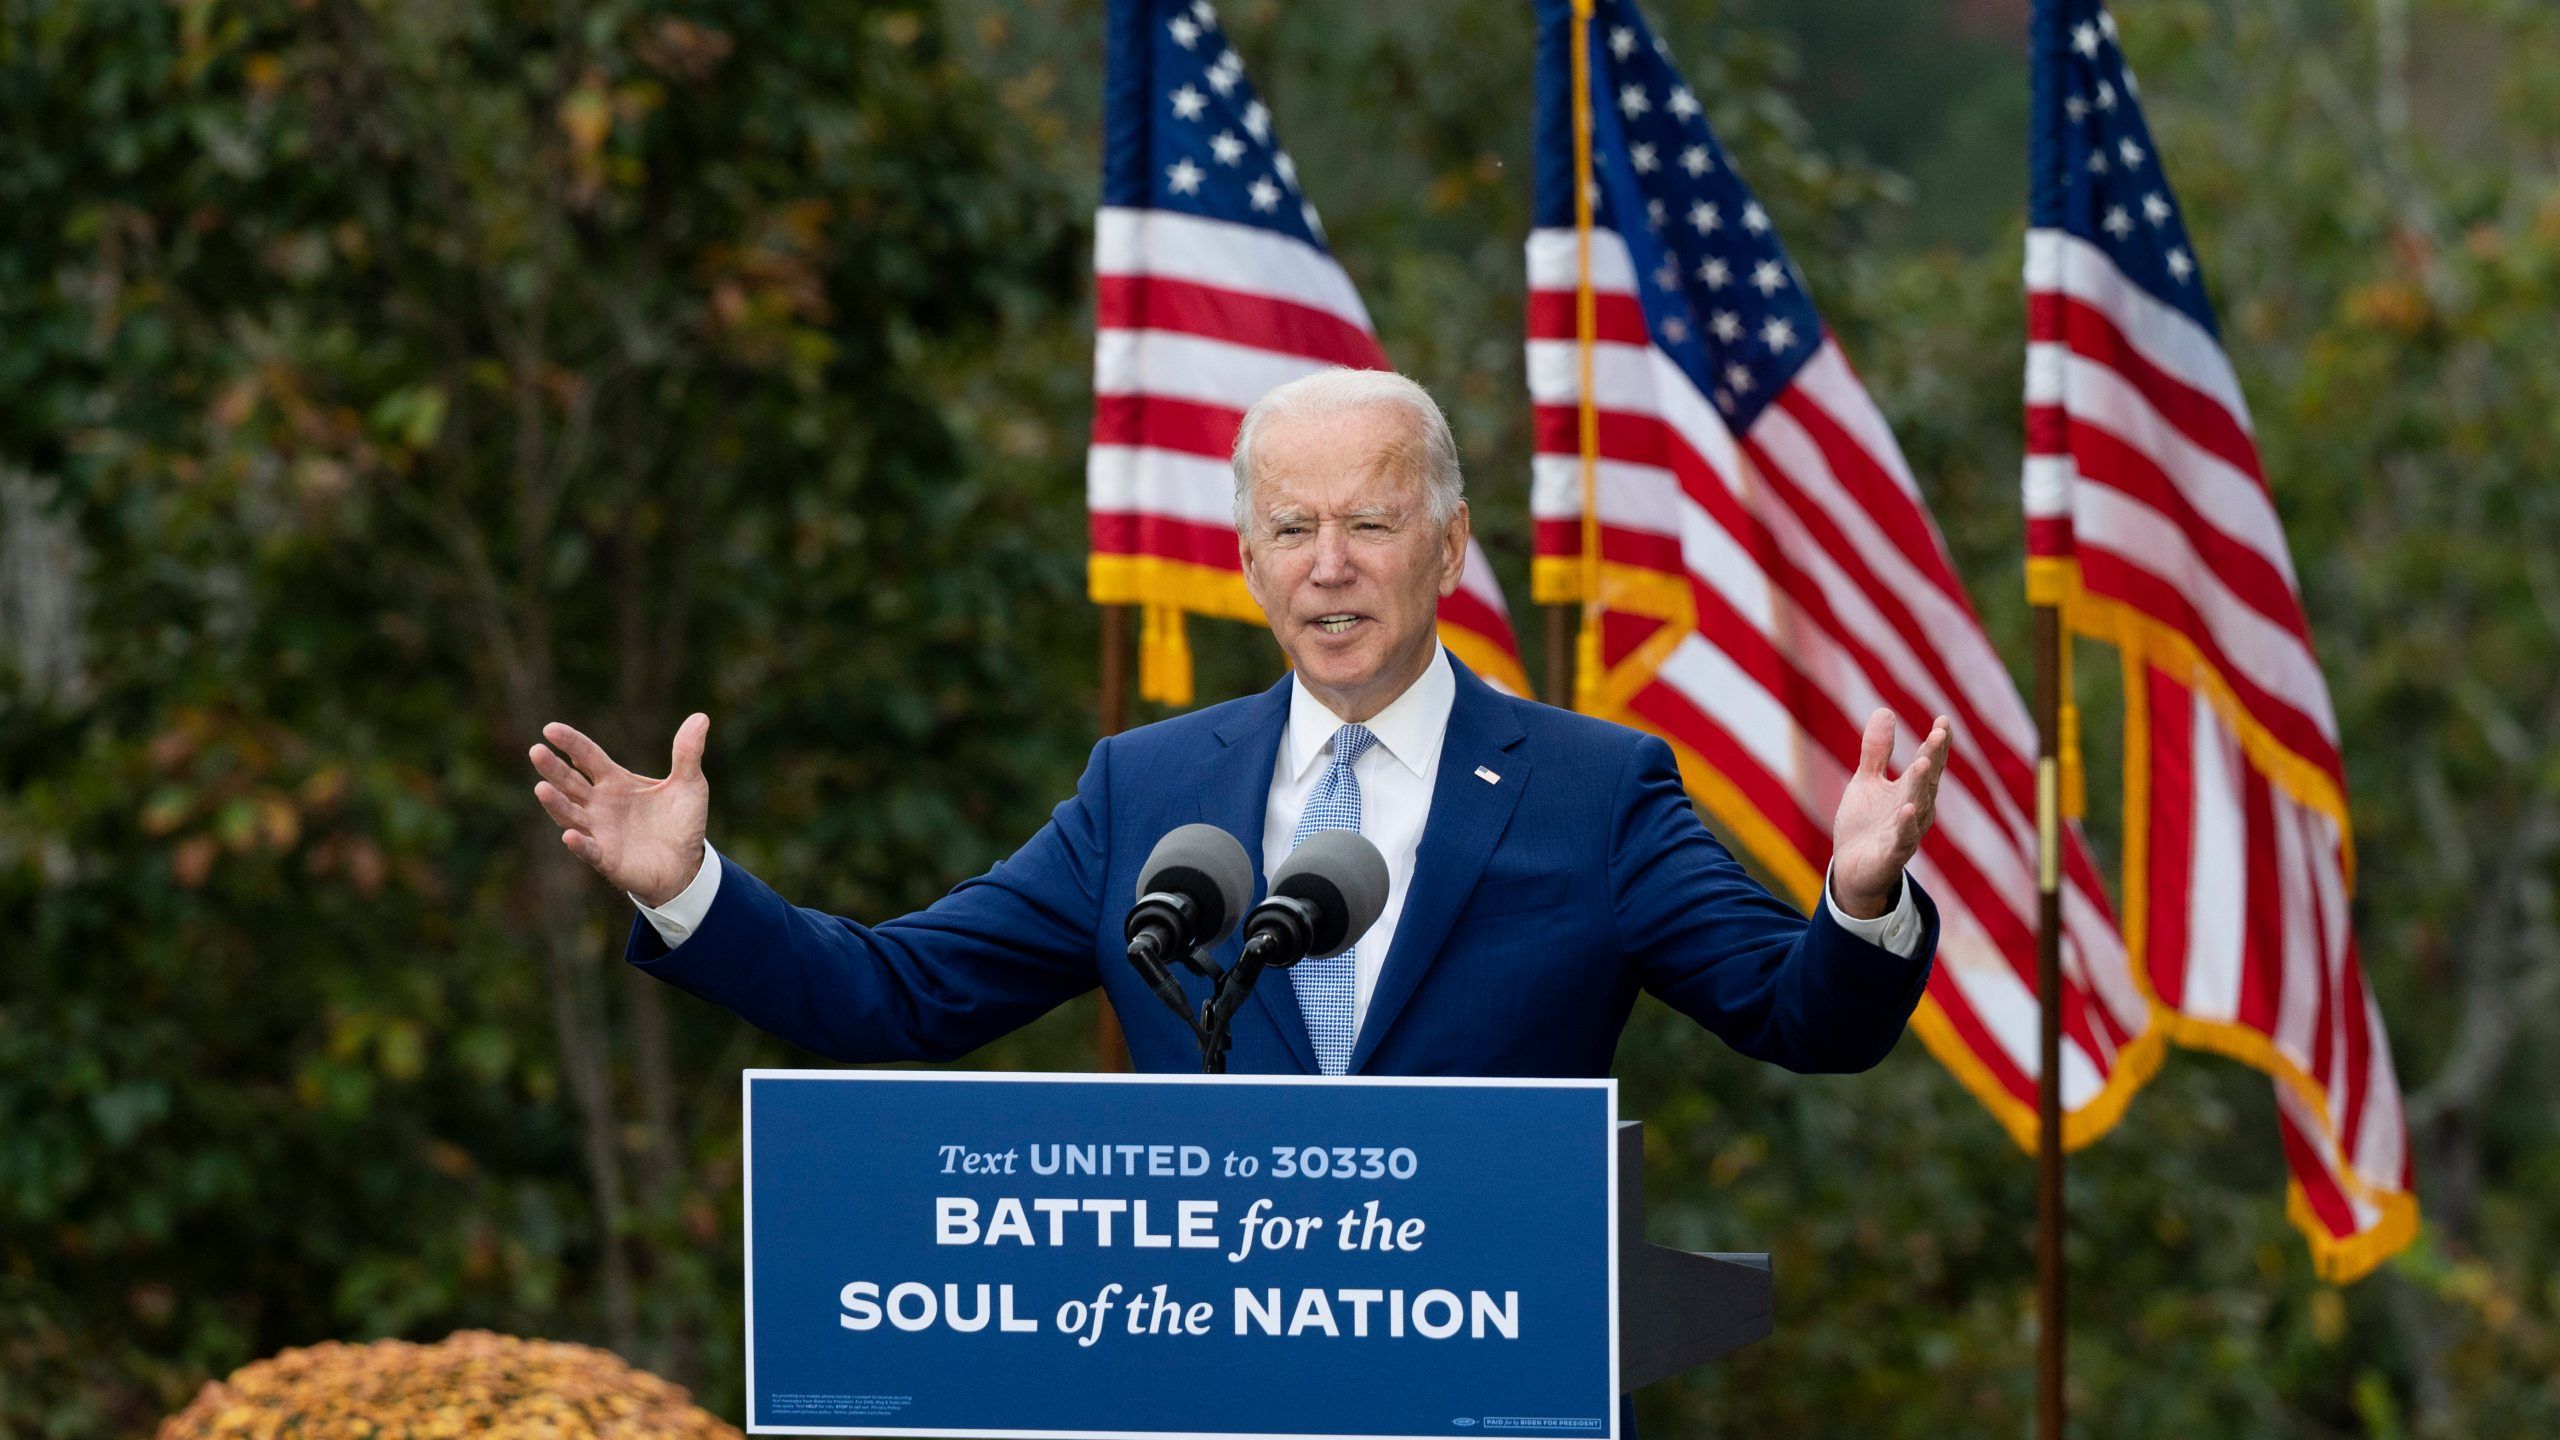 Joe Biden headed for historic margin in California, poll shows